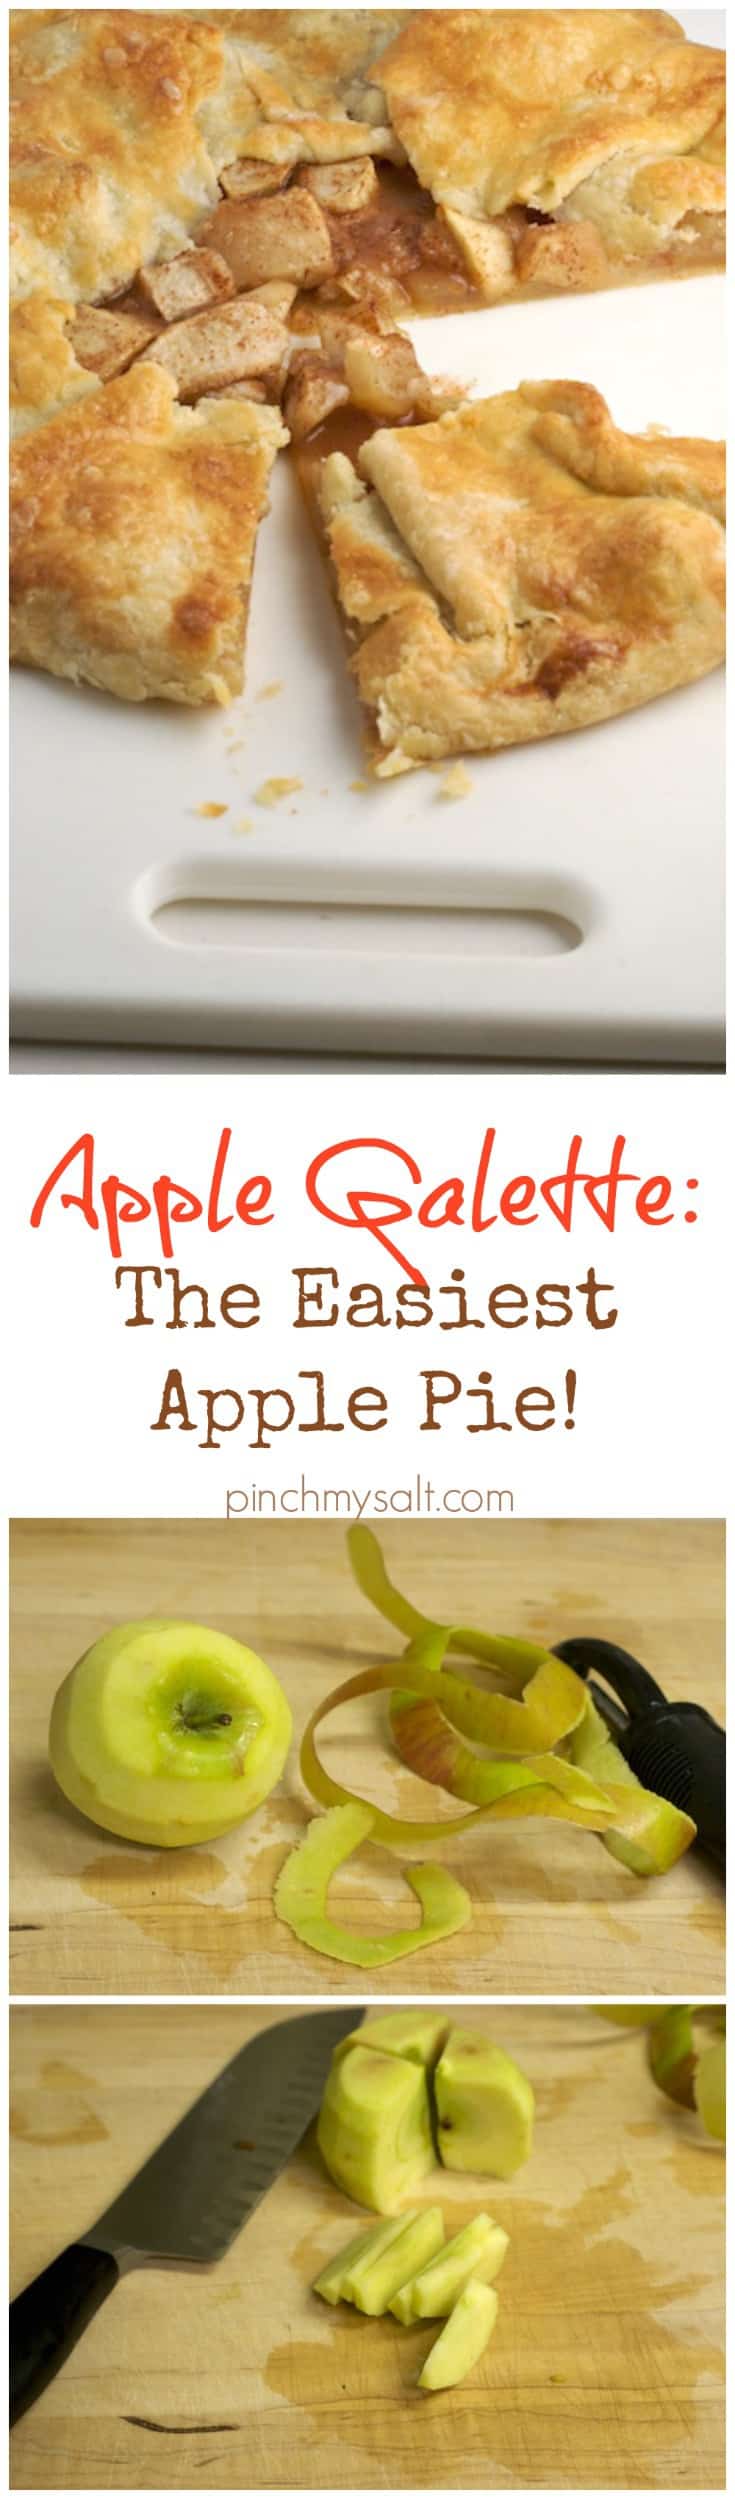 Apple Galette Recipe - Easiest Apple Pie! | pinchmysalt.com